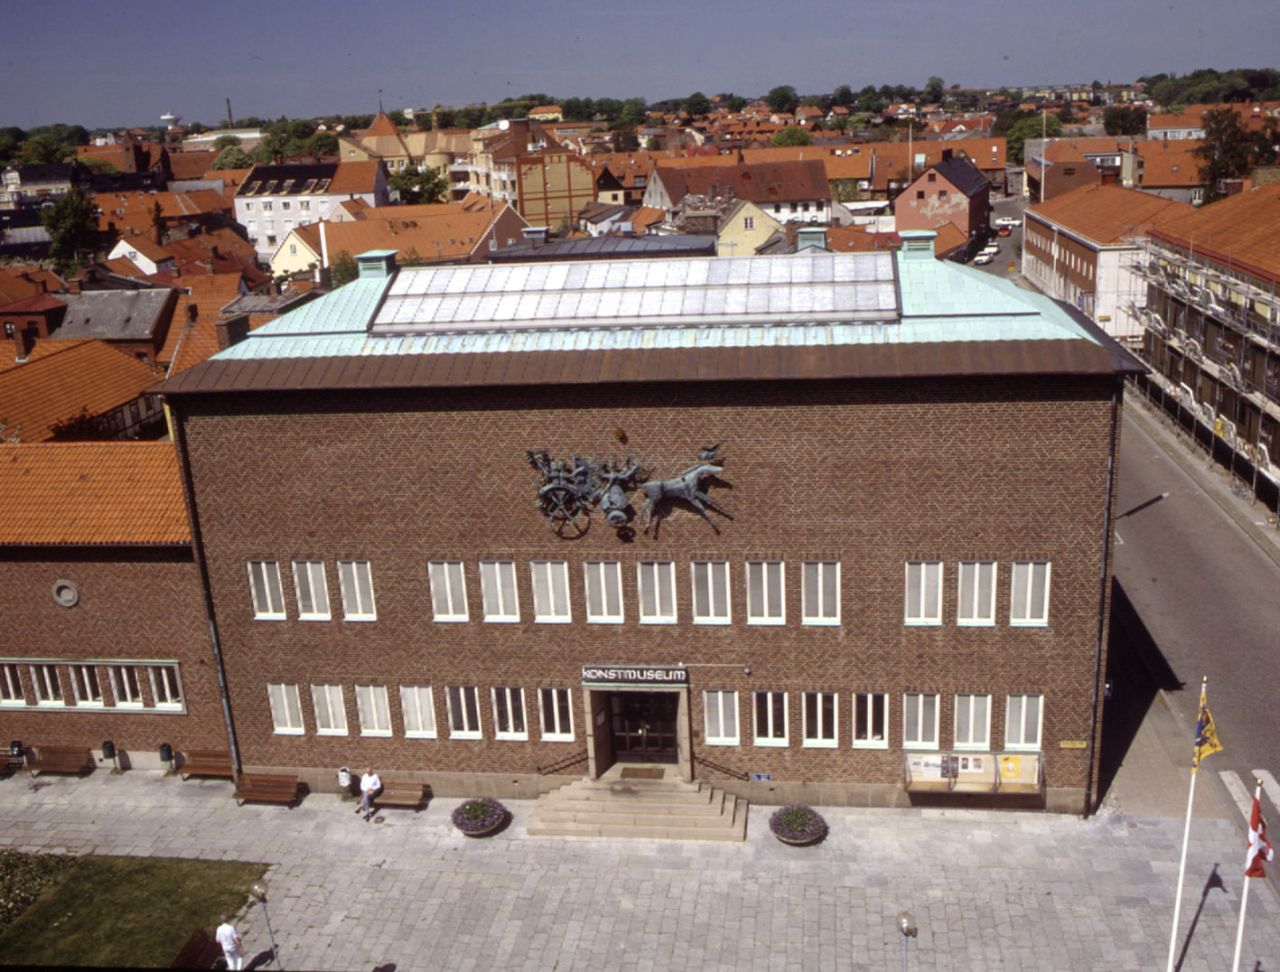 Ystads Konstmuseum